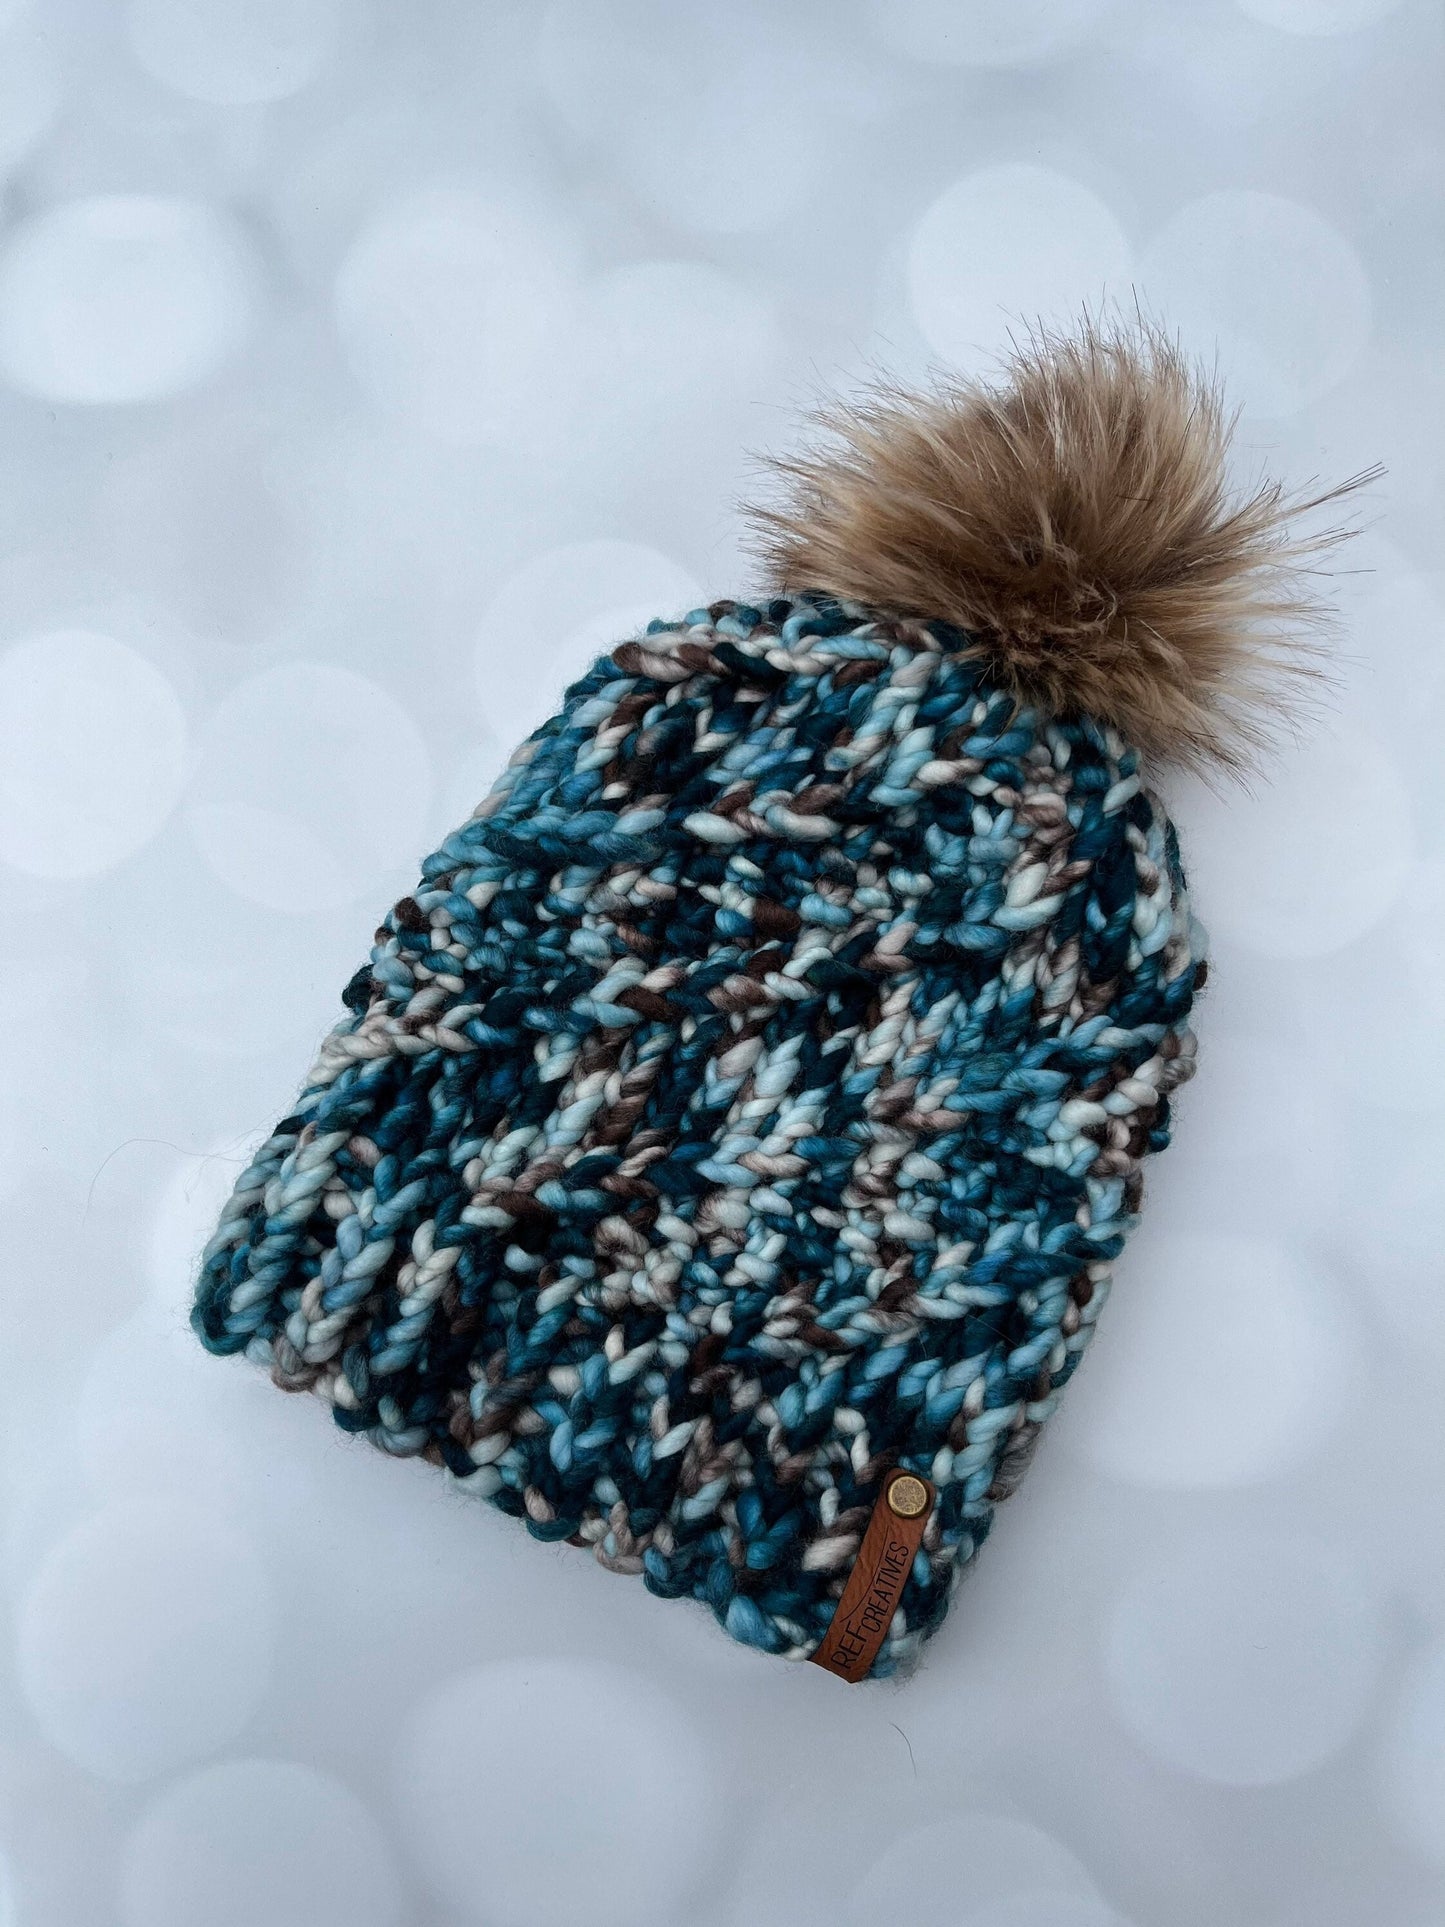 Luxury Blue Merino Wool Knit Hat - Java Blue Sidewinder Hand Knit Hat with Hand Dyed Yarn